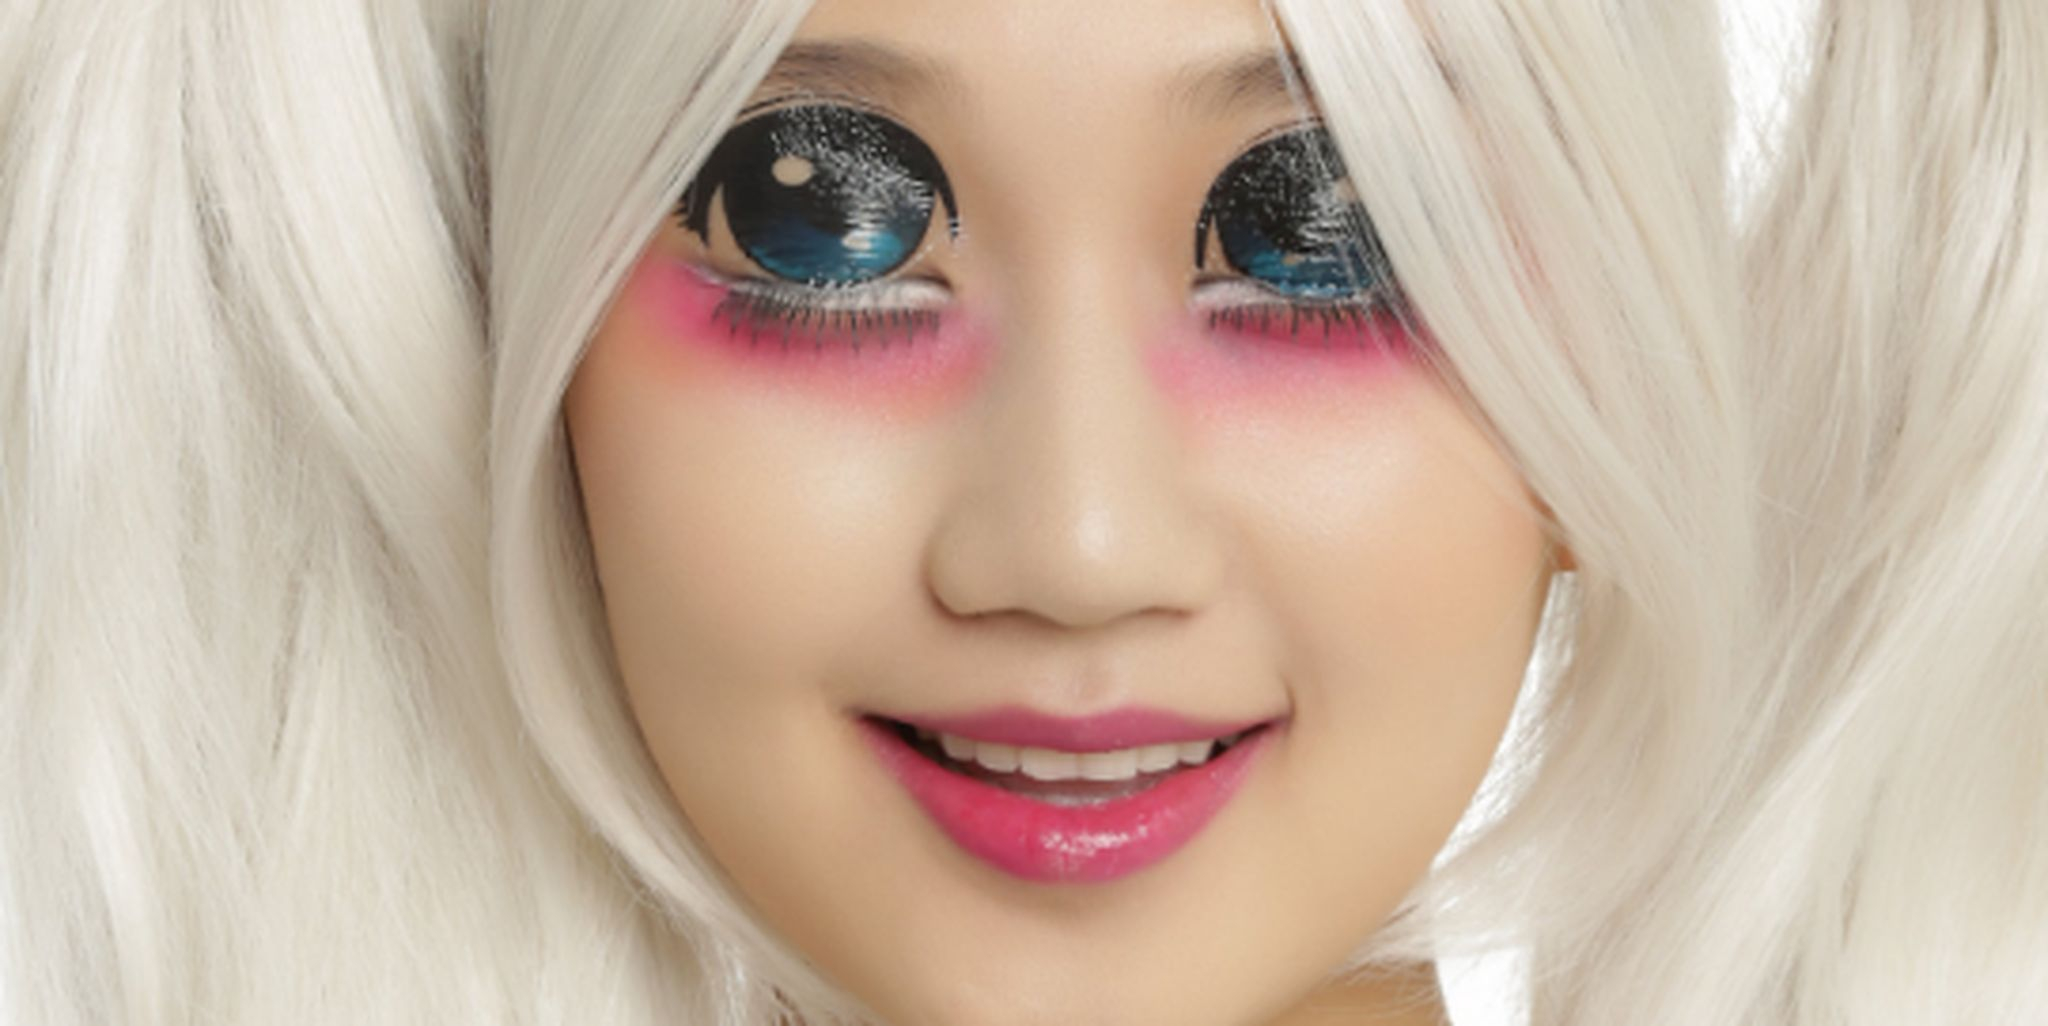 Anime Eye Makeup Anime Eye Tattoos Are A Truly Terrifying Halloween Makeup Option